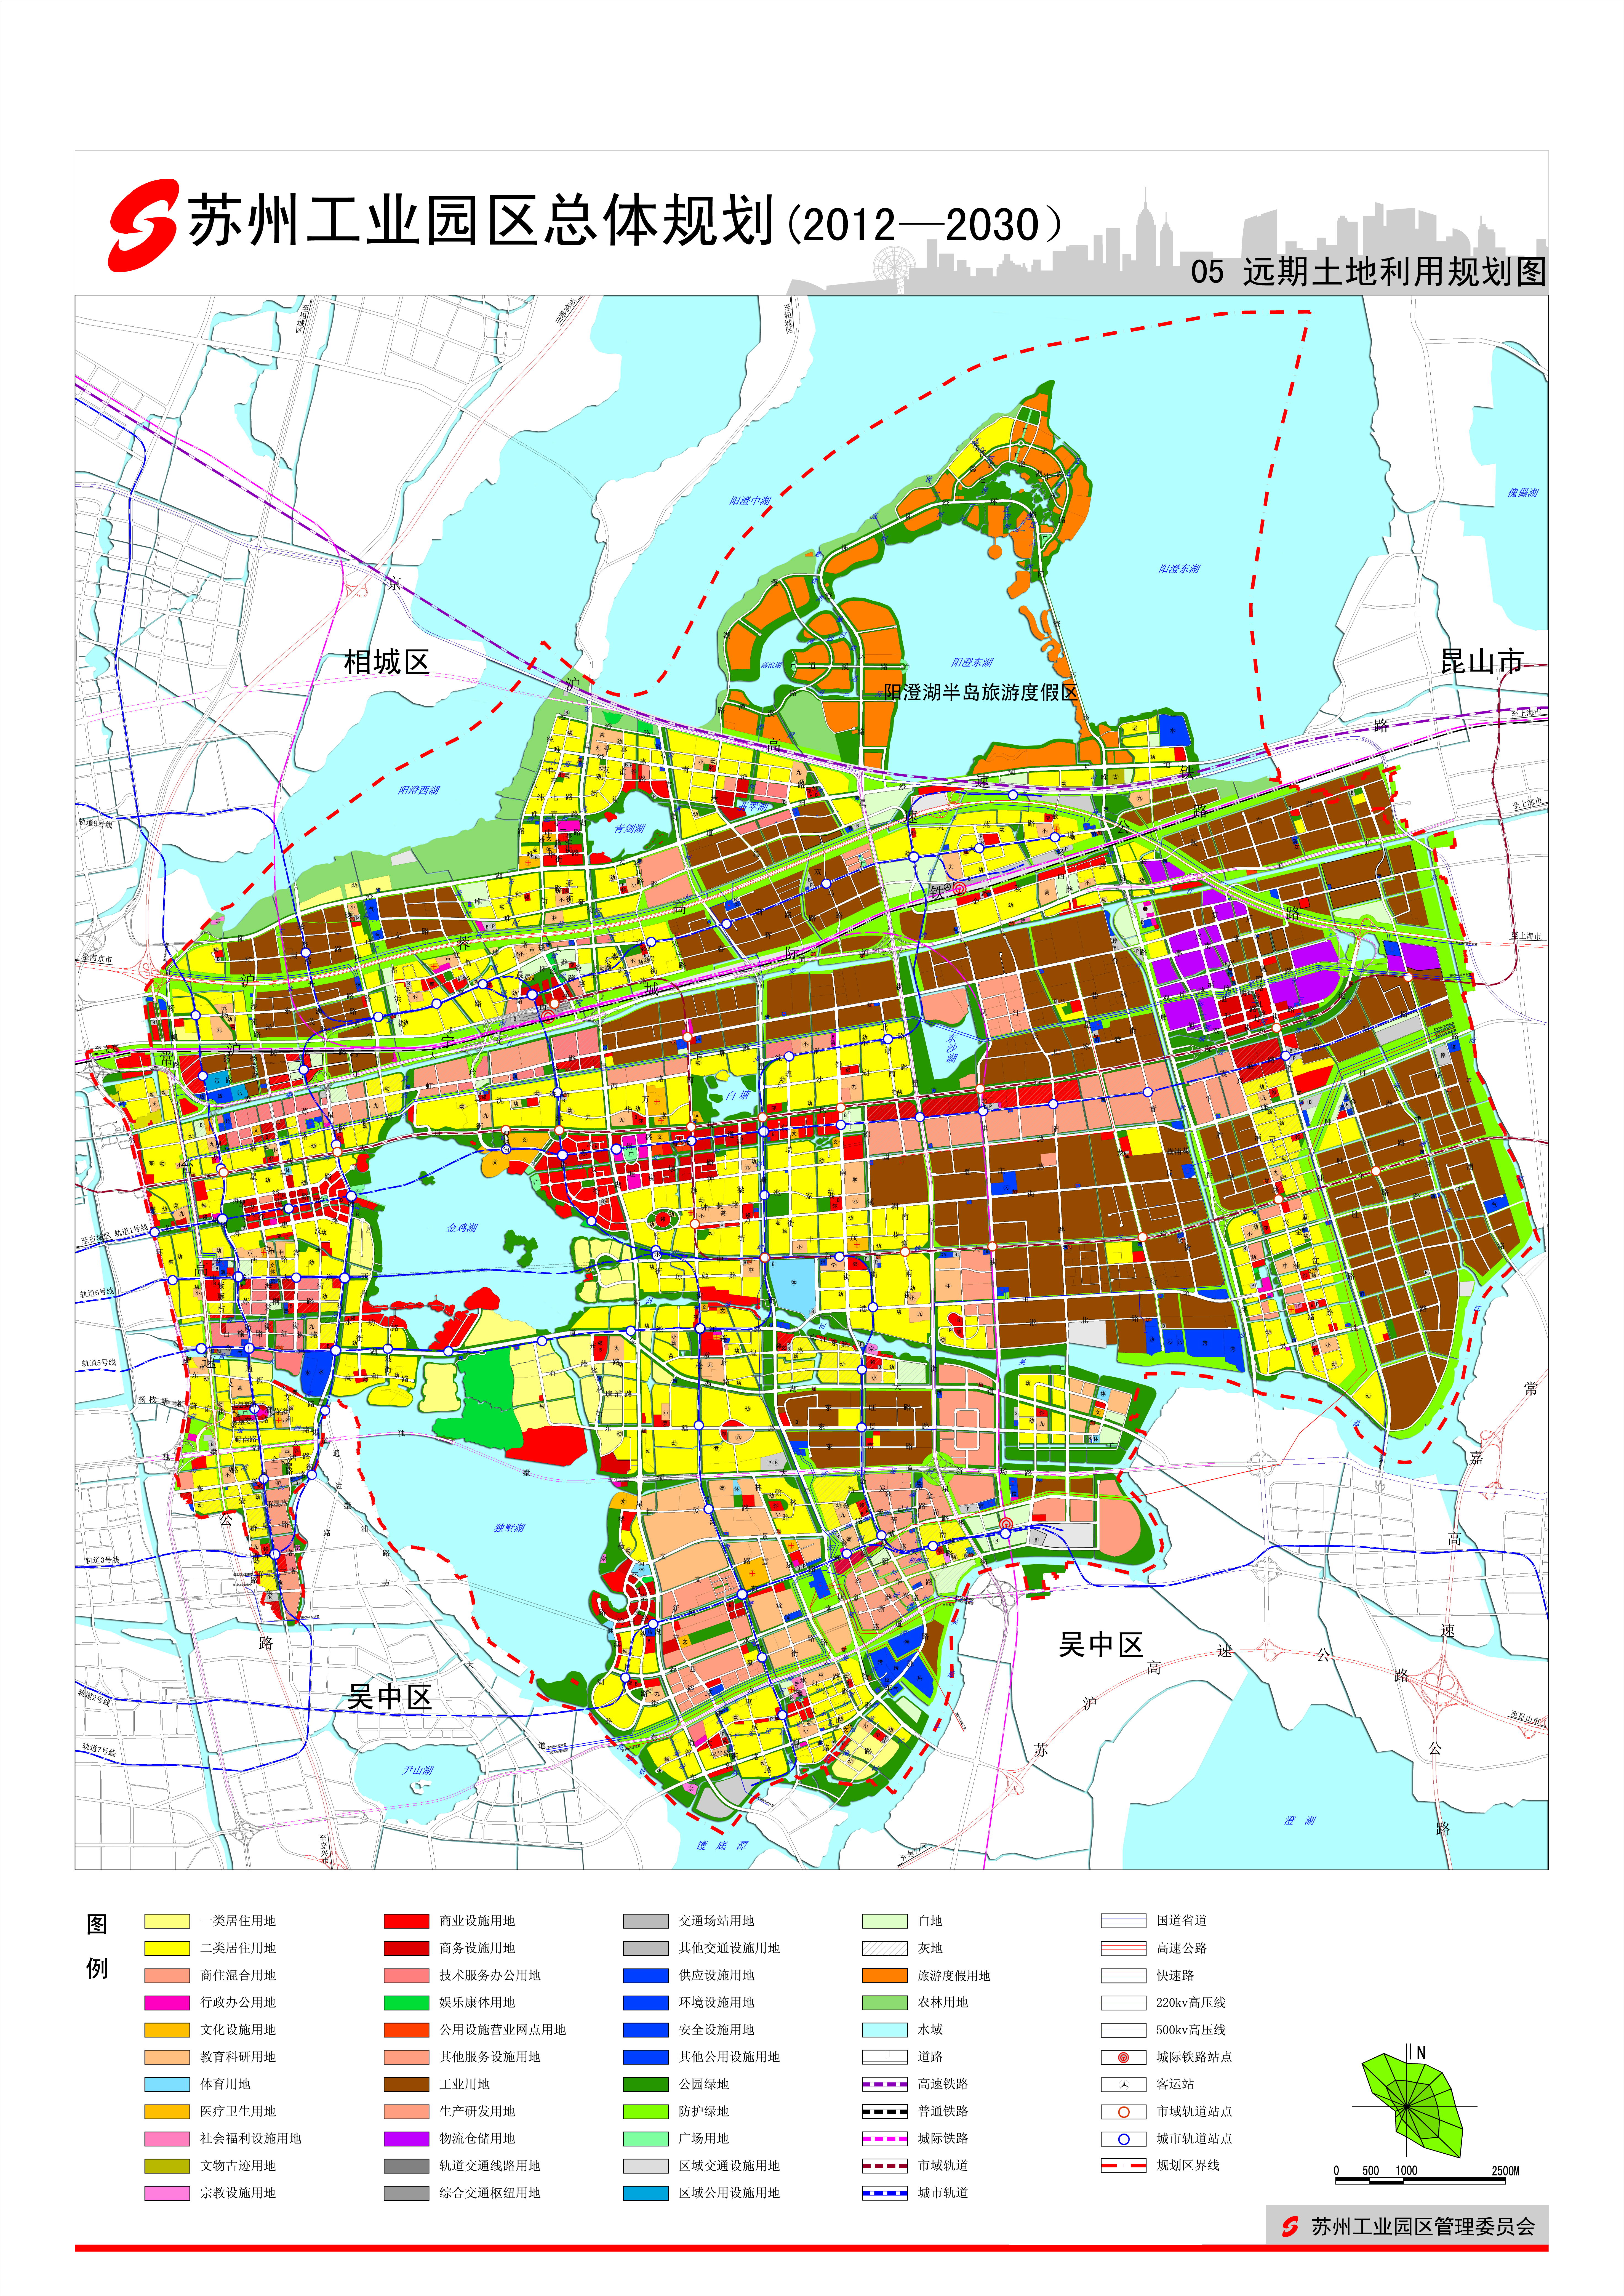 suzhou_overrall_layout_05_land_utilize